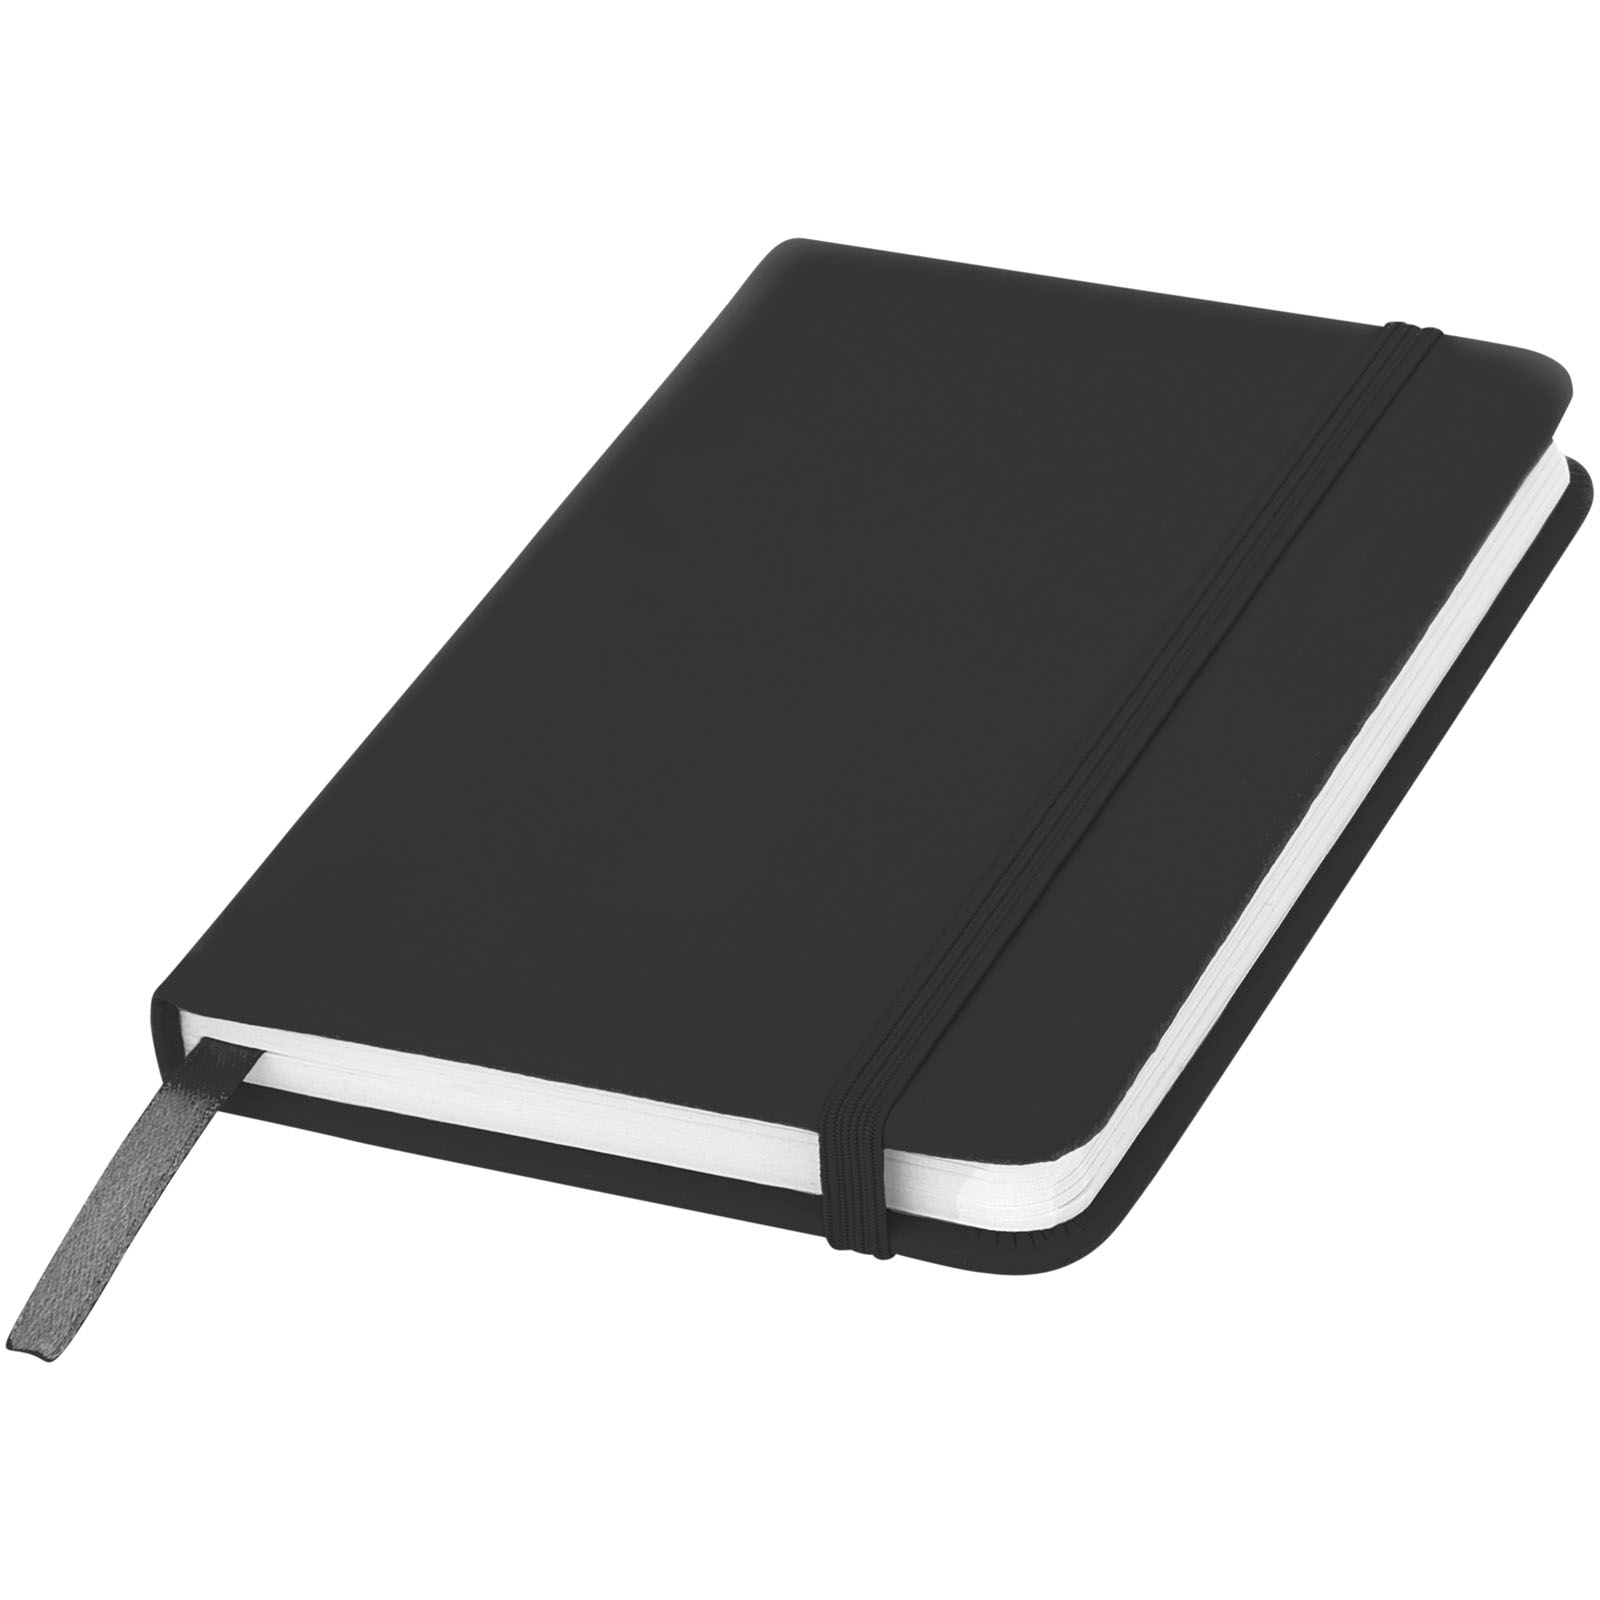 Notebooks & Desk Essentials - Spectrum A6 hard cover notebook